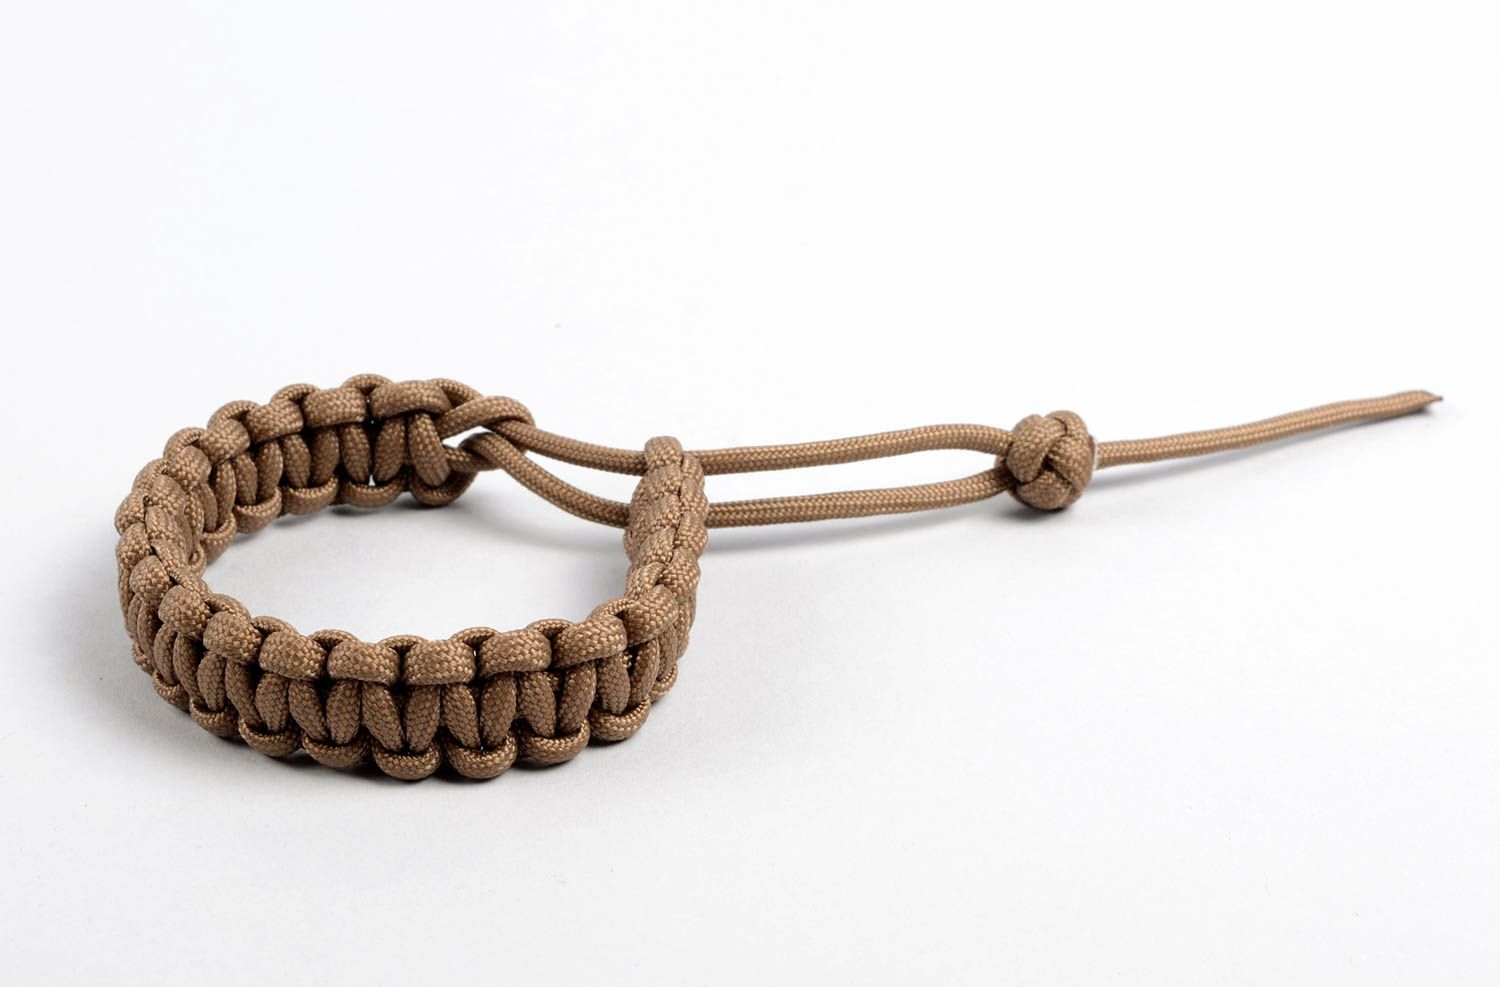 Stylish handmade woven bracelet paracord bracelet textile jewelry designs photo 2